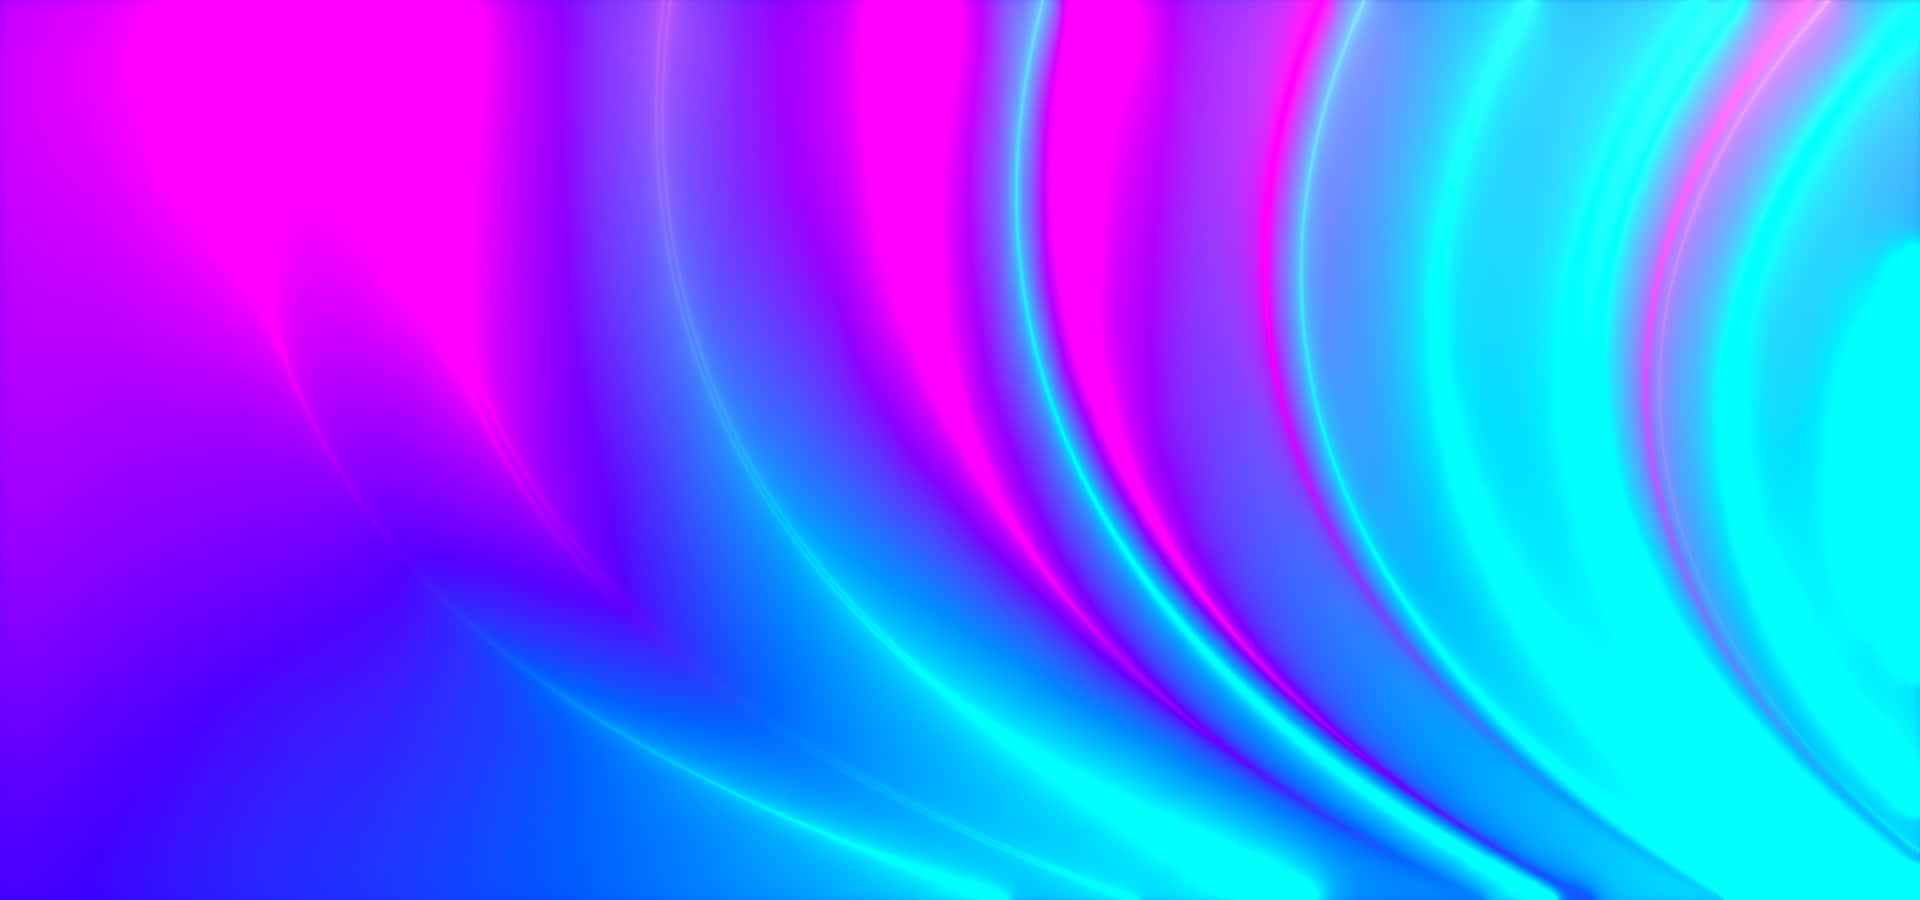 Electric blue plasma radiates in this mesmerizing image. Wallpaper